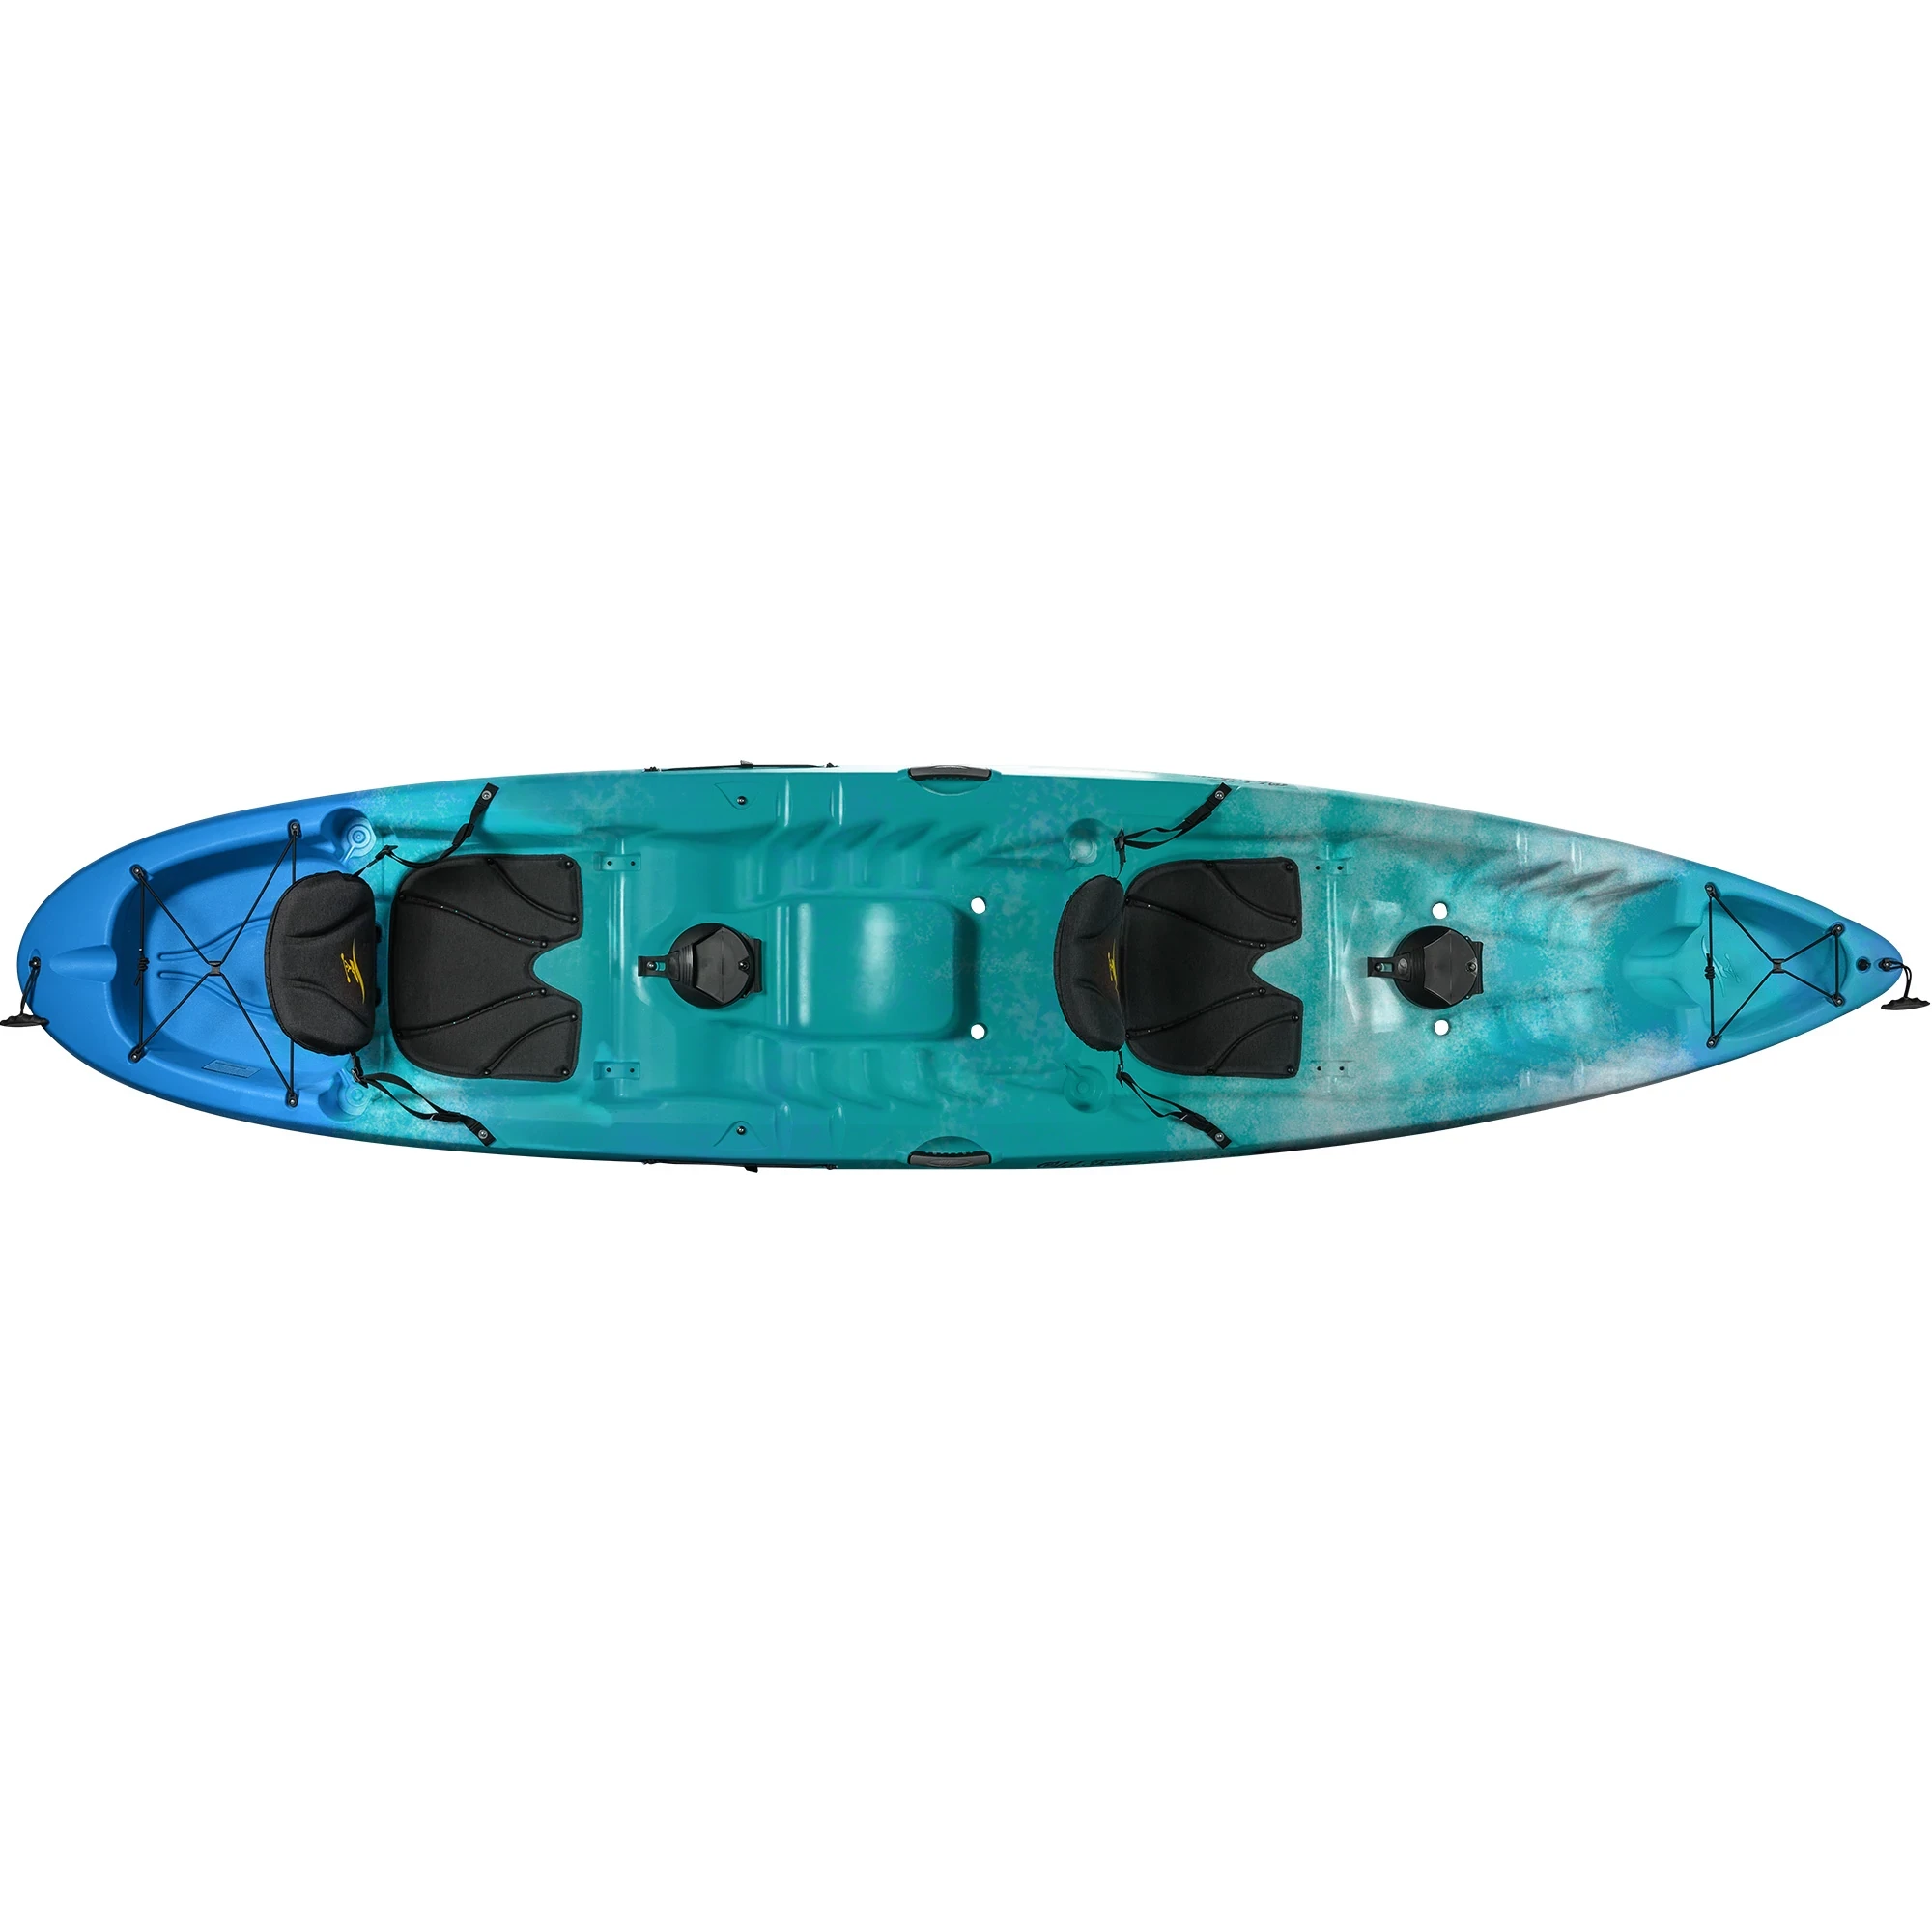 Ocean Kayak Malibu Two XL - Seaglass - Top View